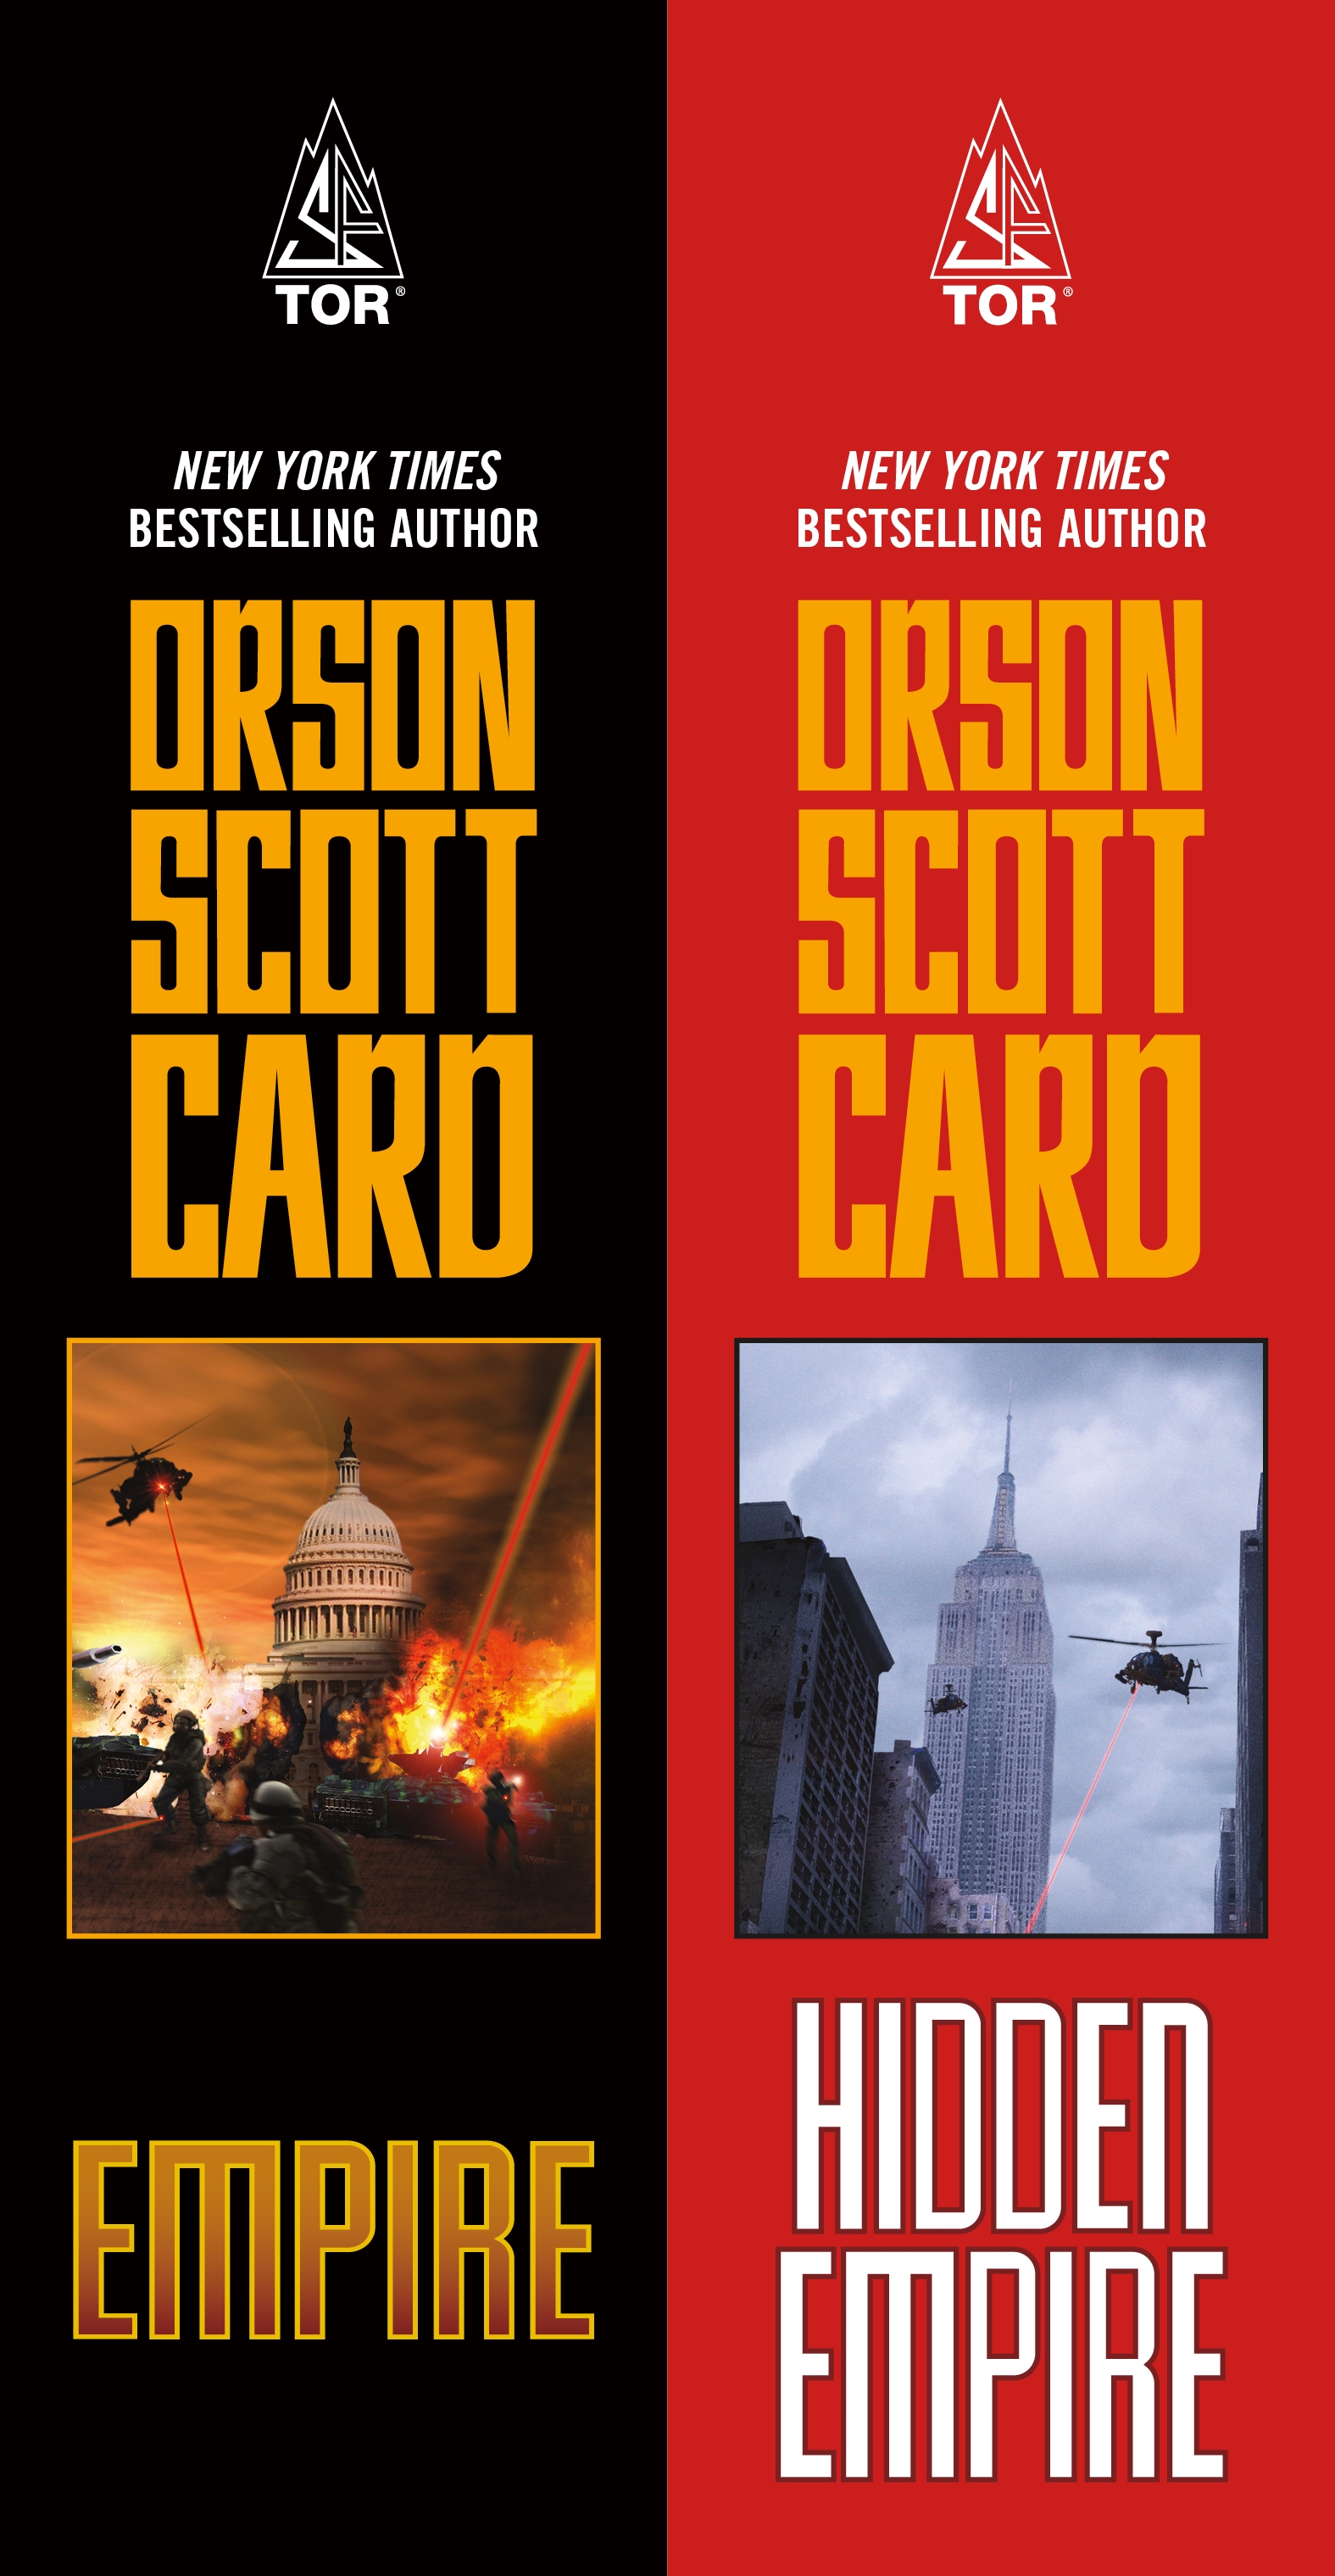 Empire: The Series : (Empire, Hidden Empire) by Orson Scott Card